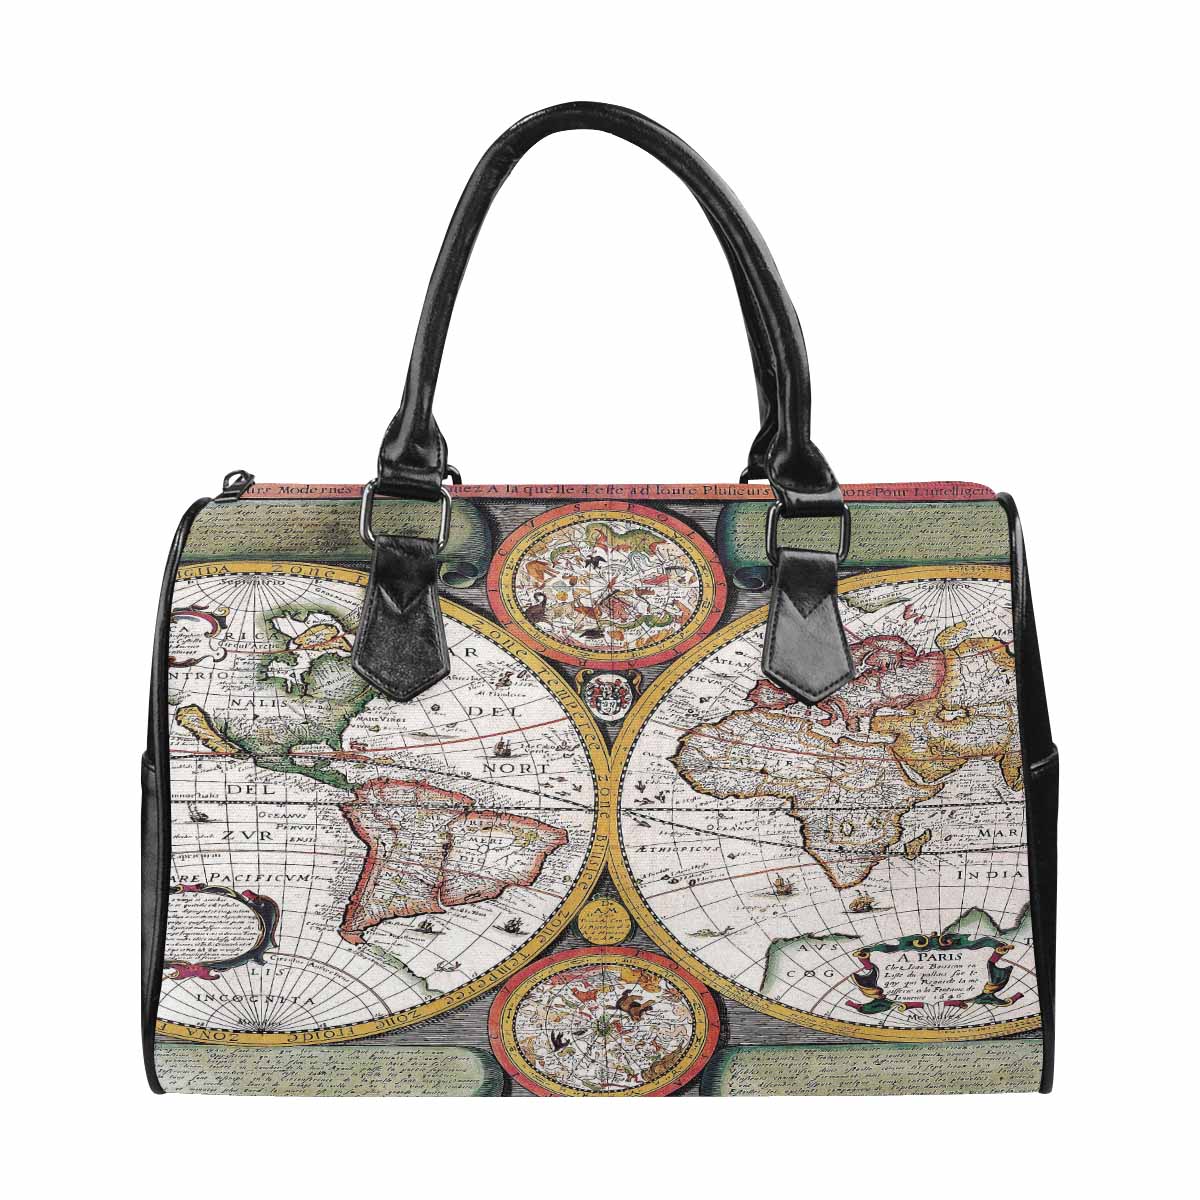 Antique Map design Boston handbag, Model 1695321, Design 31